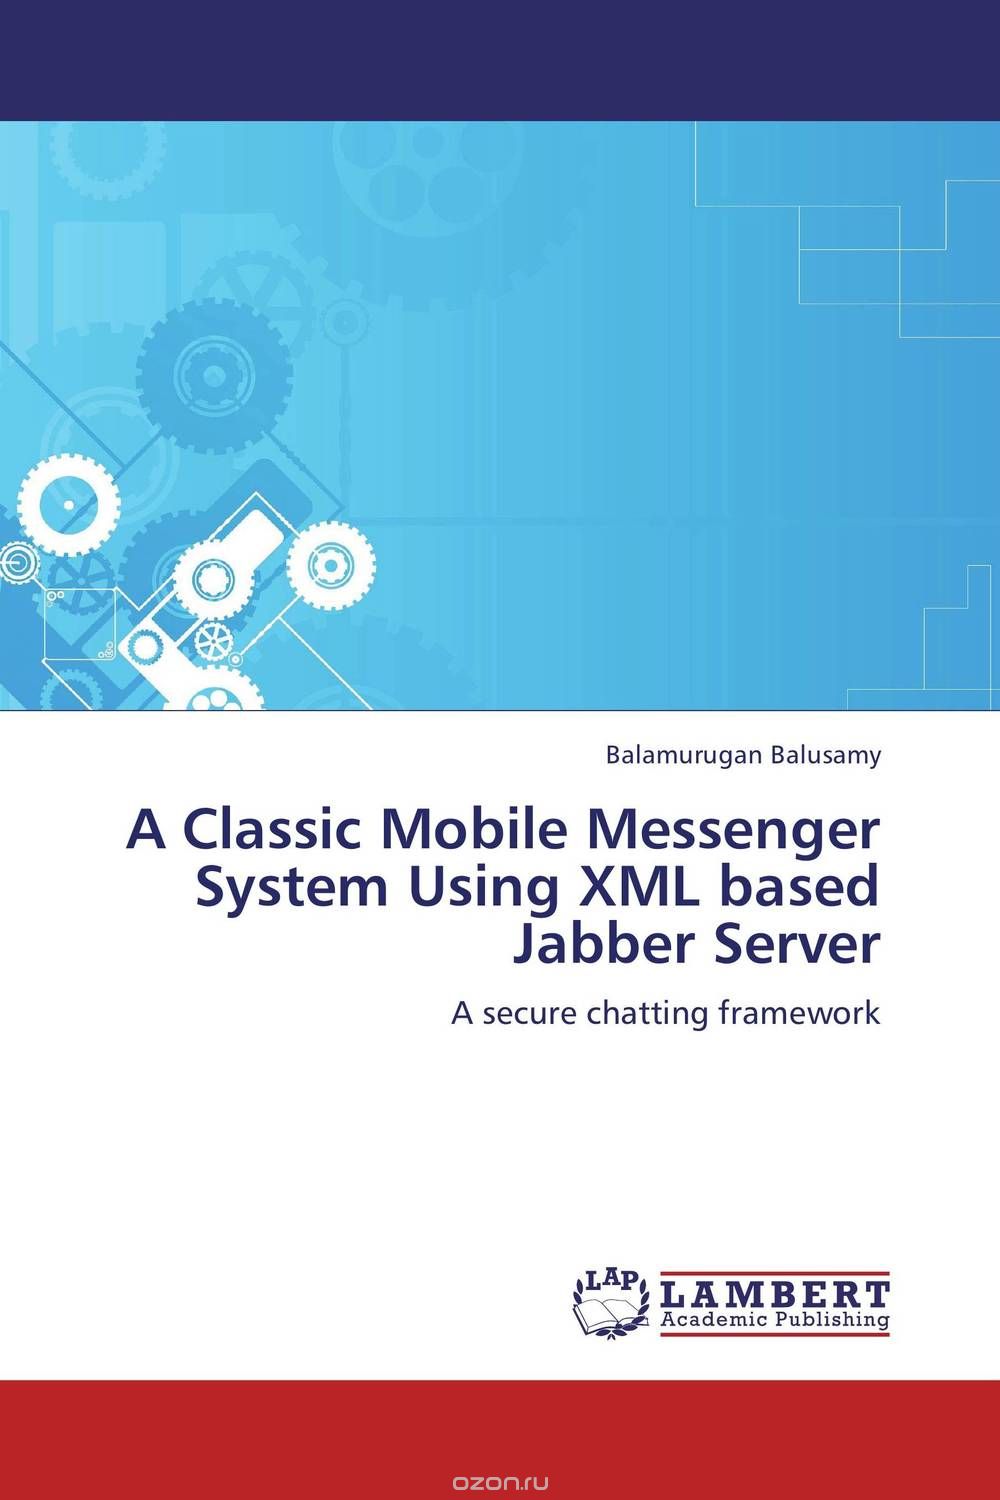 Скачать книгу "A Classic Mobile Messenger System Using XML based Jabber Server"